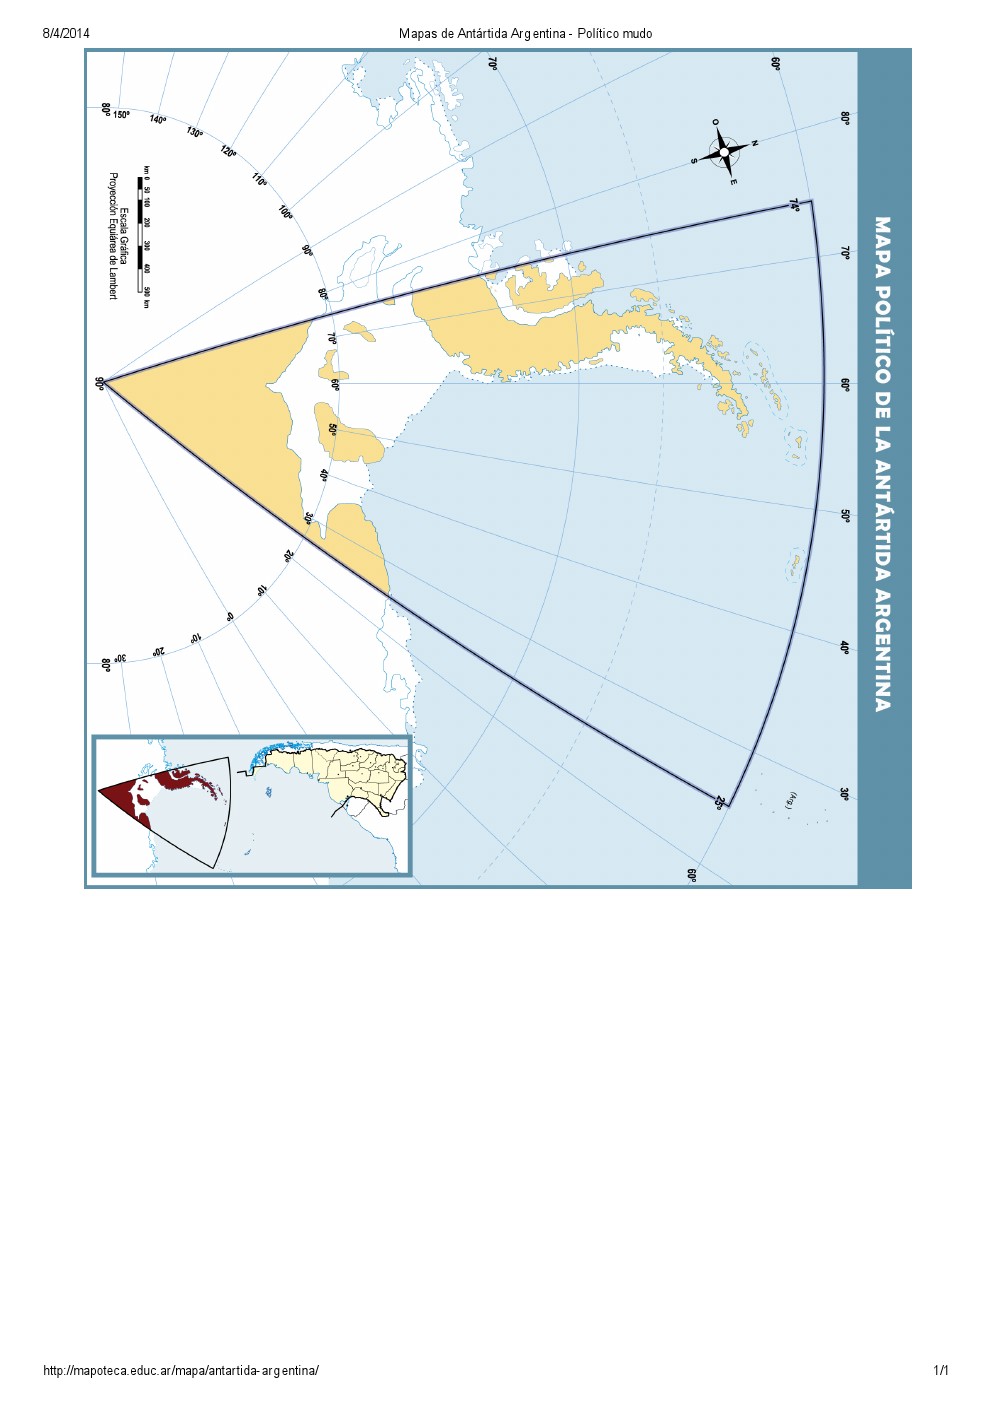 Mapa político mudo de la Antártida Argentina. Mapoteca de Educ.ar